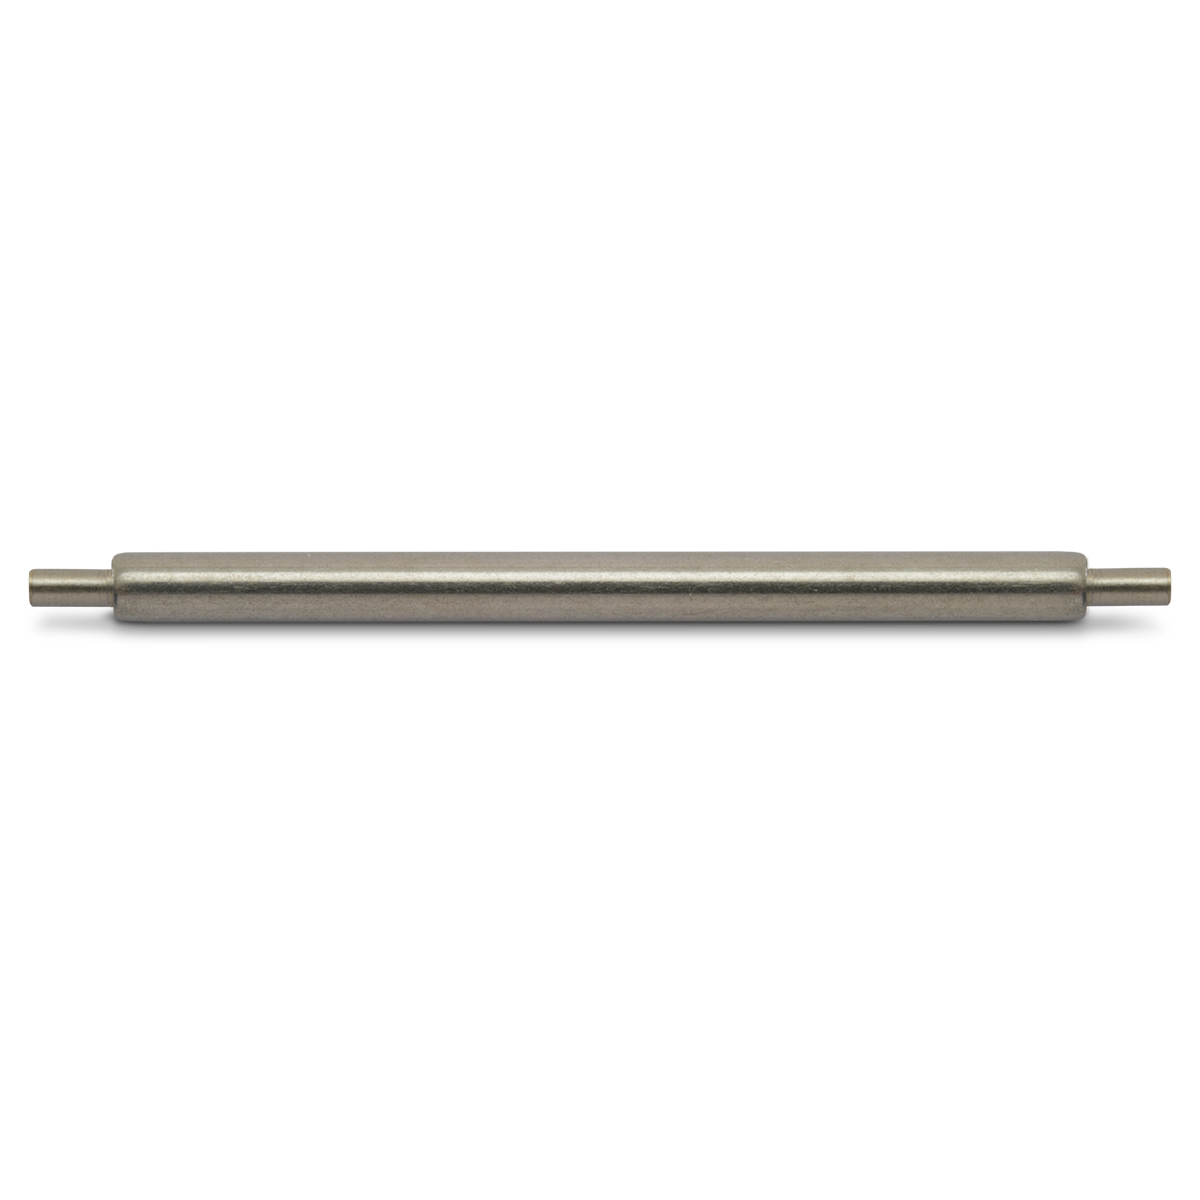 100 Barrettes en acier inox, sans ergots, tuyau Ø 1,0 mm, pivot Ø 0,6 mm, longueur 10 mm,  extra fin